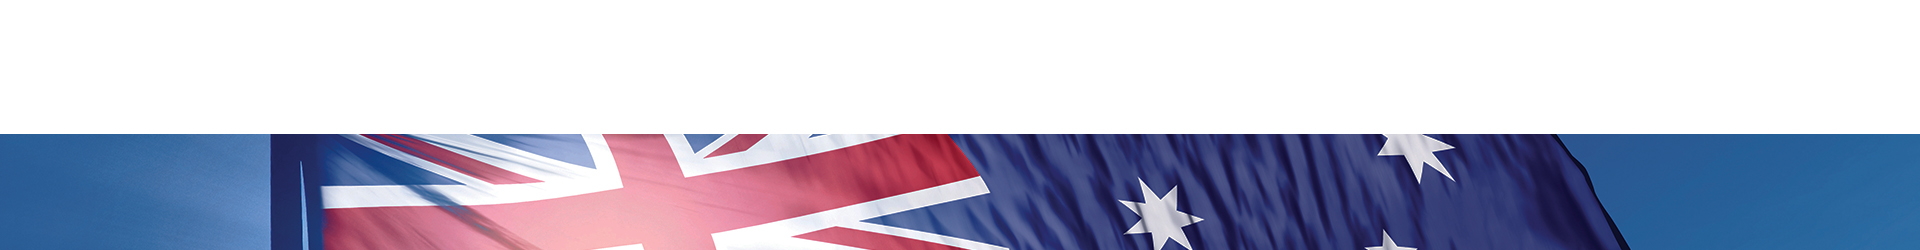 Australian National Flag Association (ANFA)